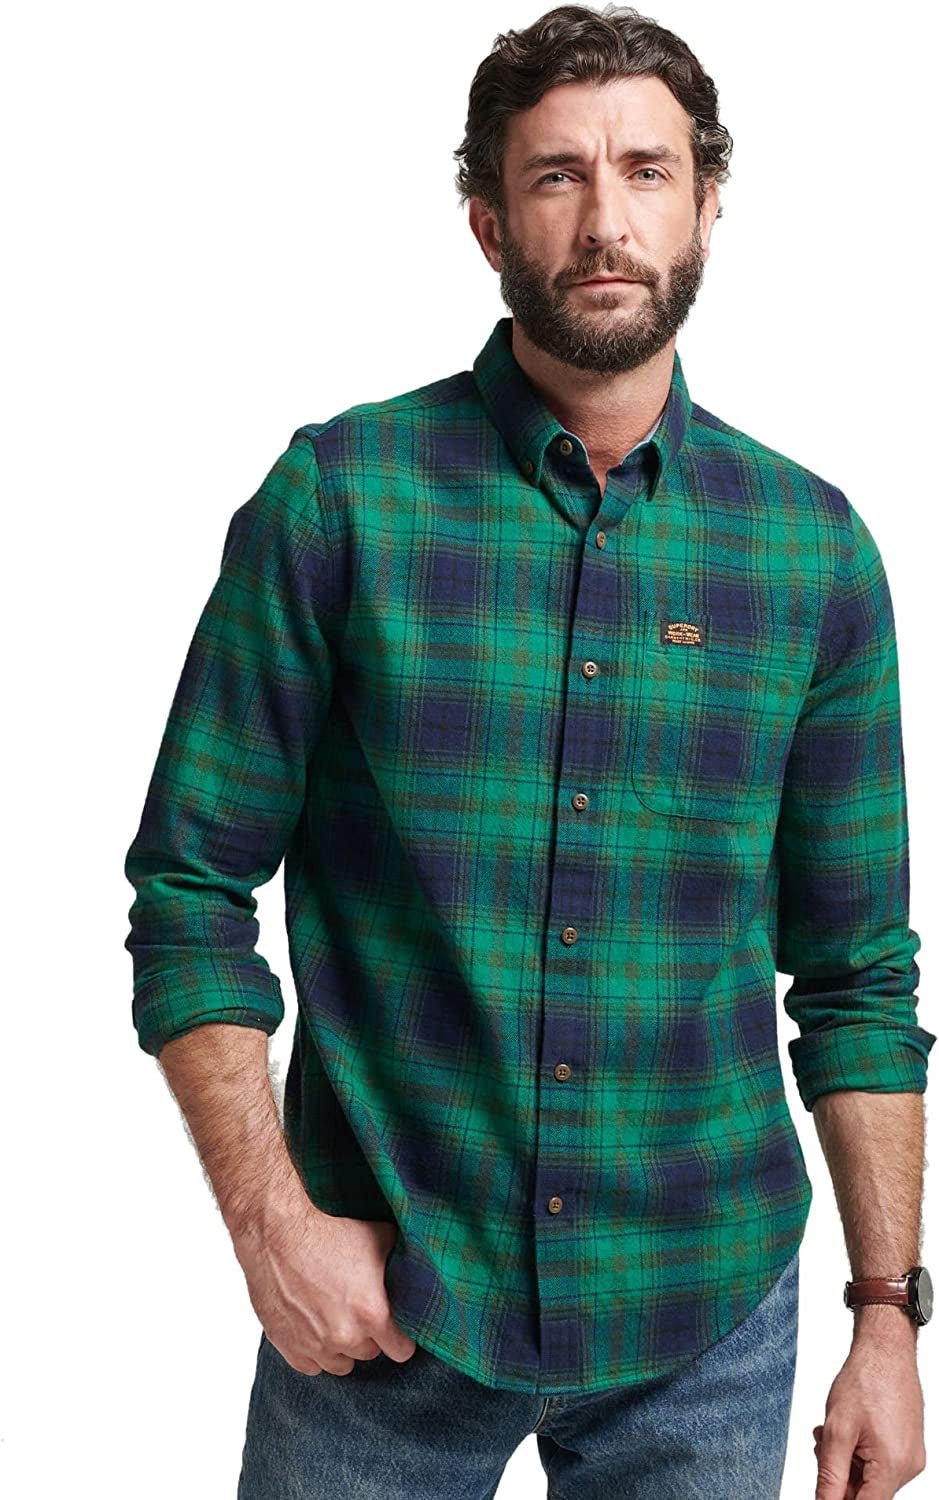 Vintage Lumberjack Shirt - Cedar Check Green - Chillis & More NZ